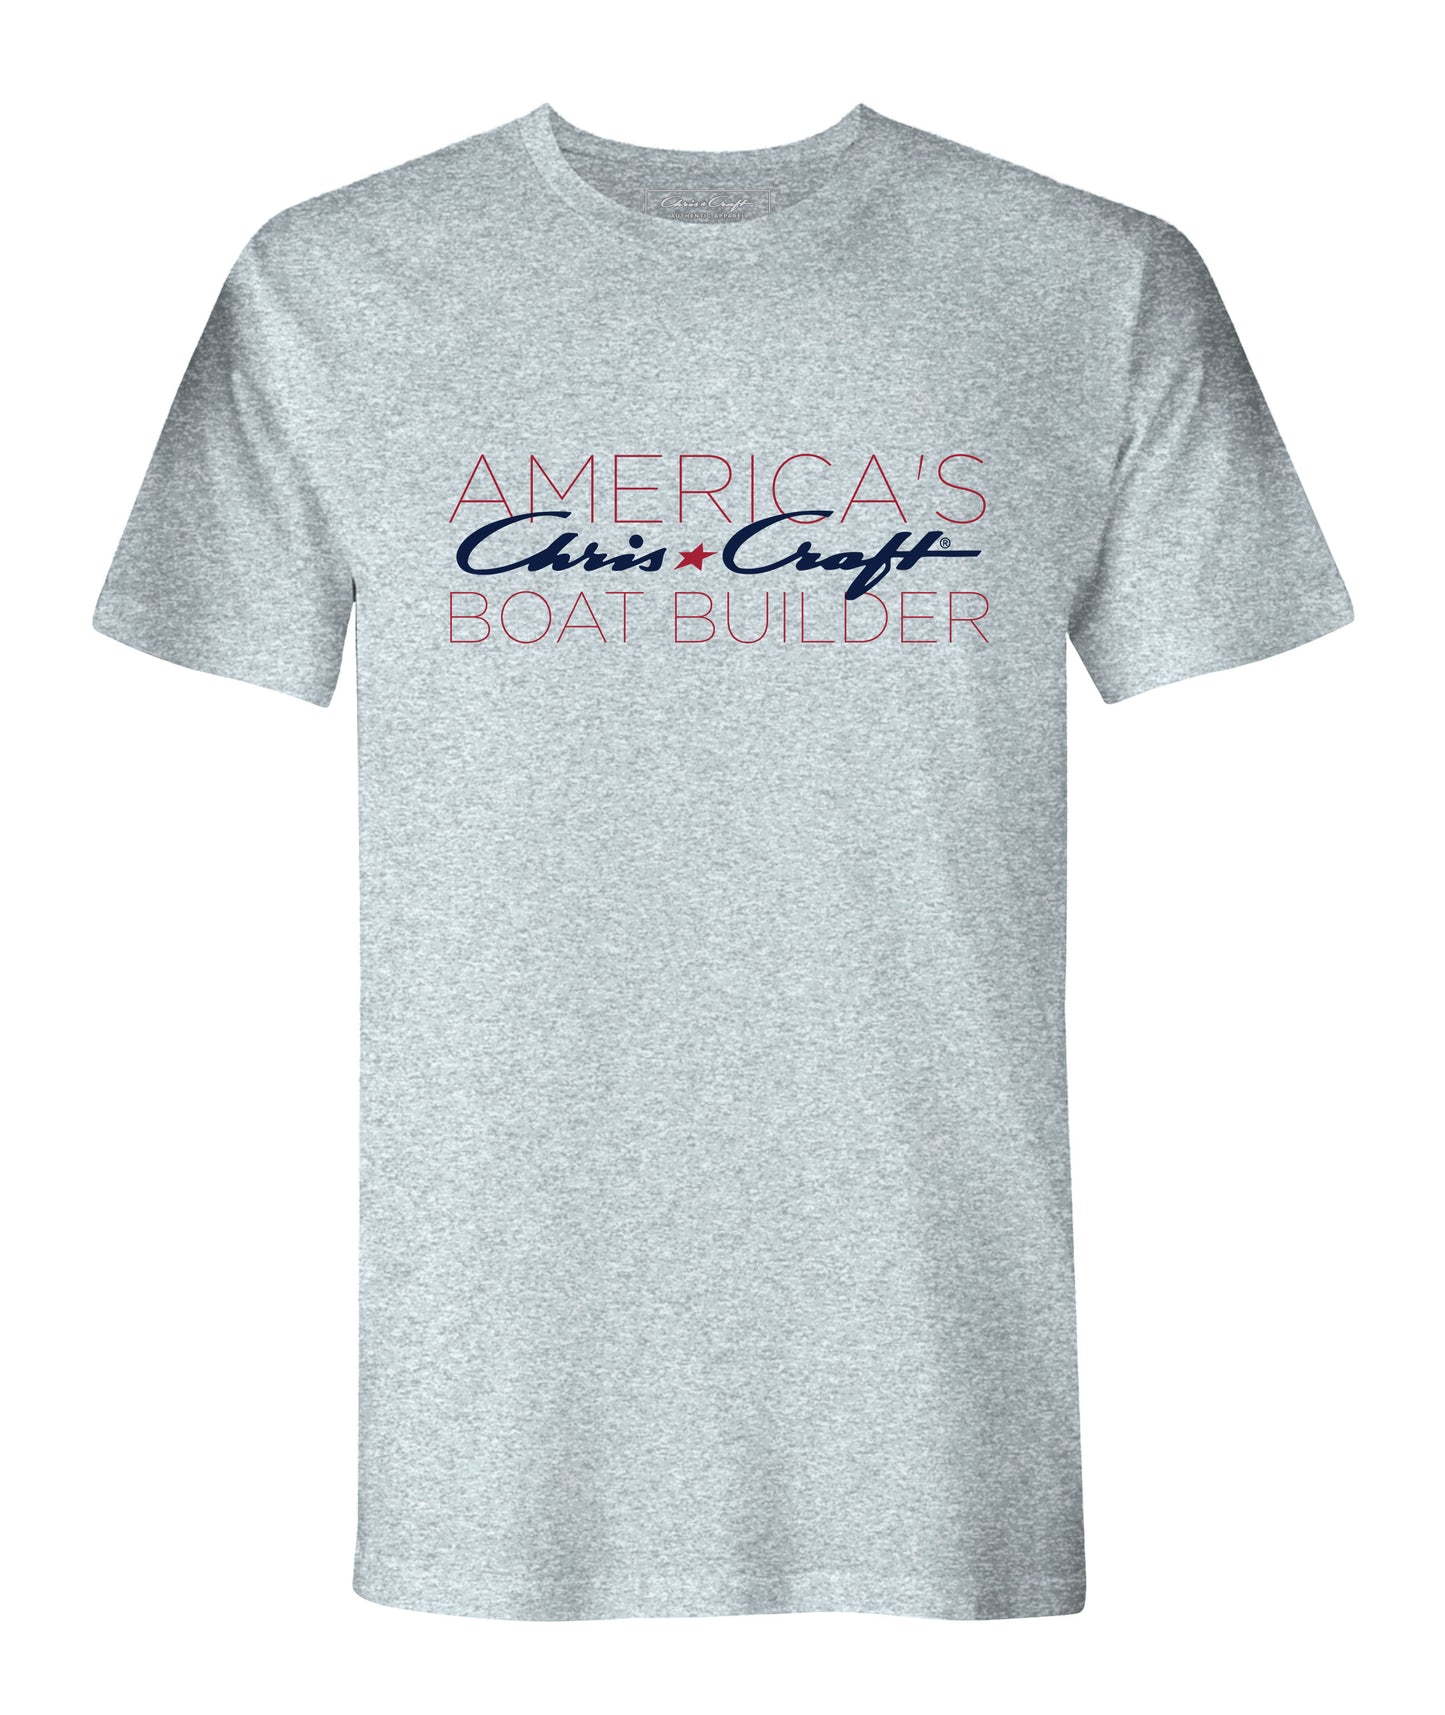 Chris-Craft America's Boat Builder Men's T-Shirt